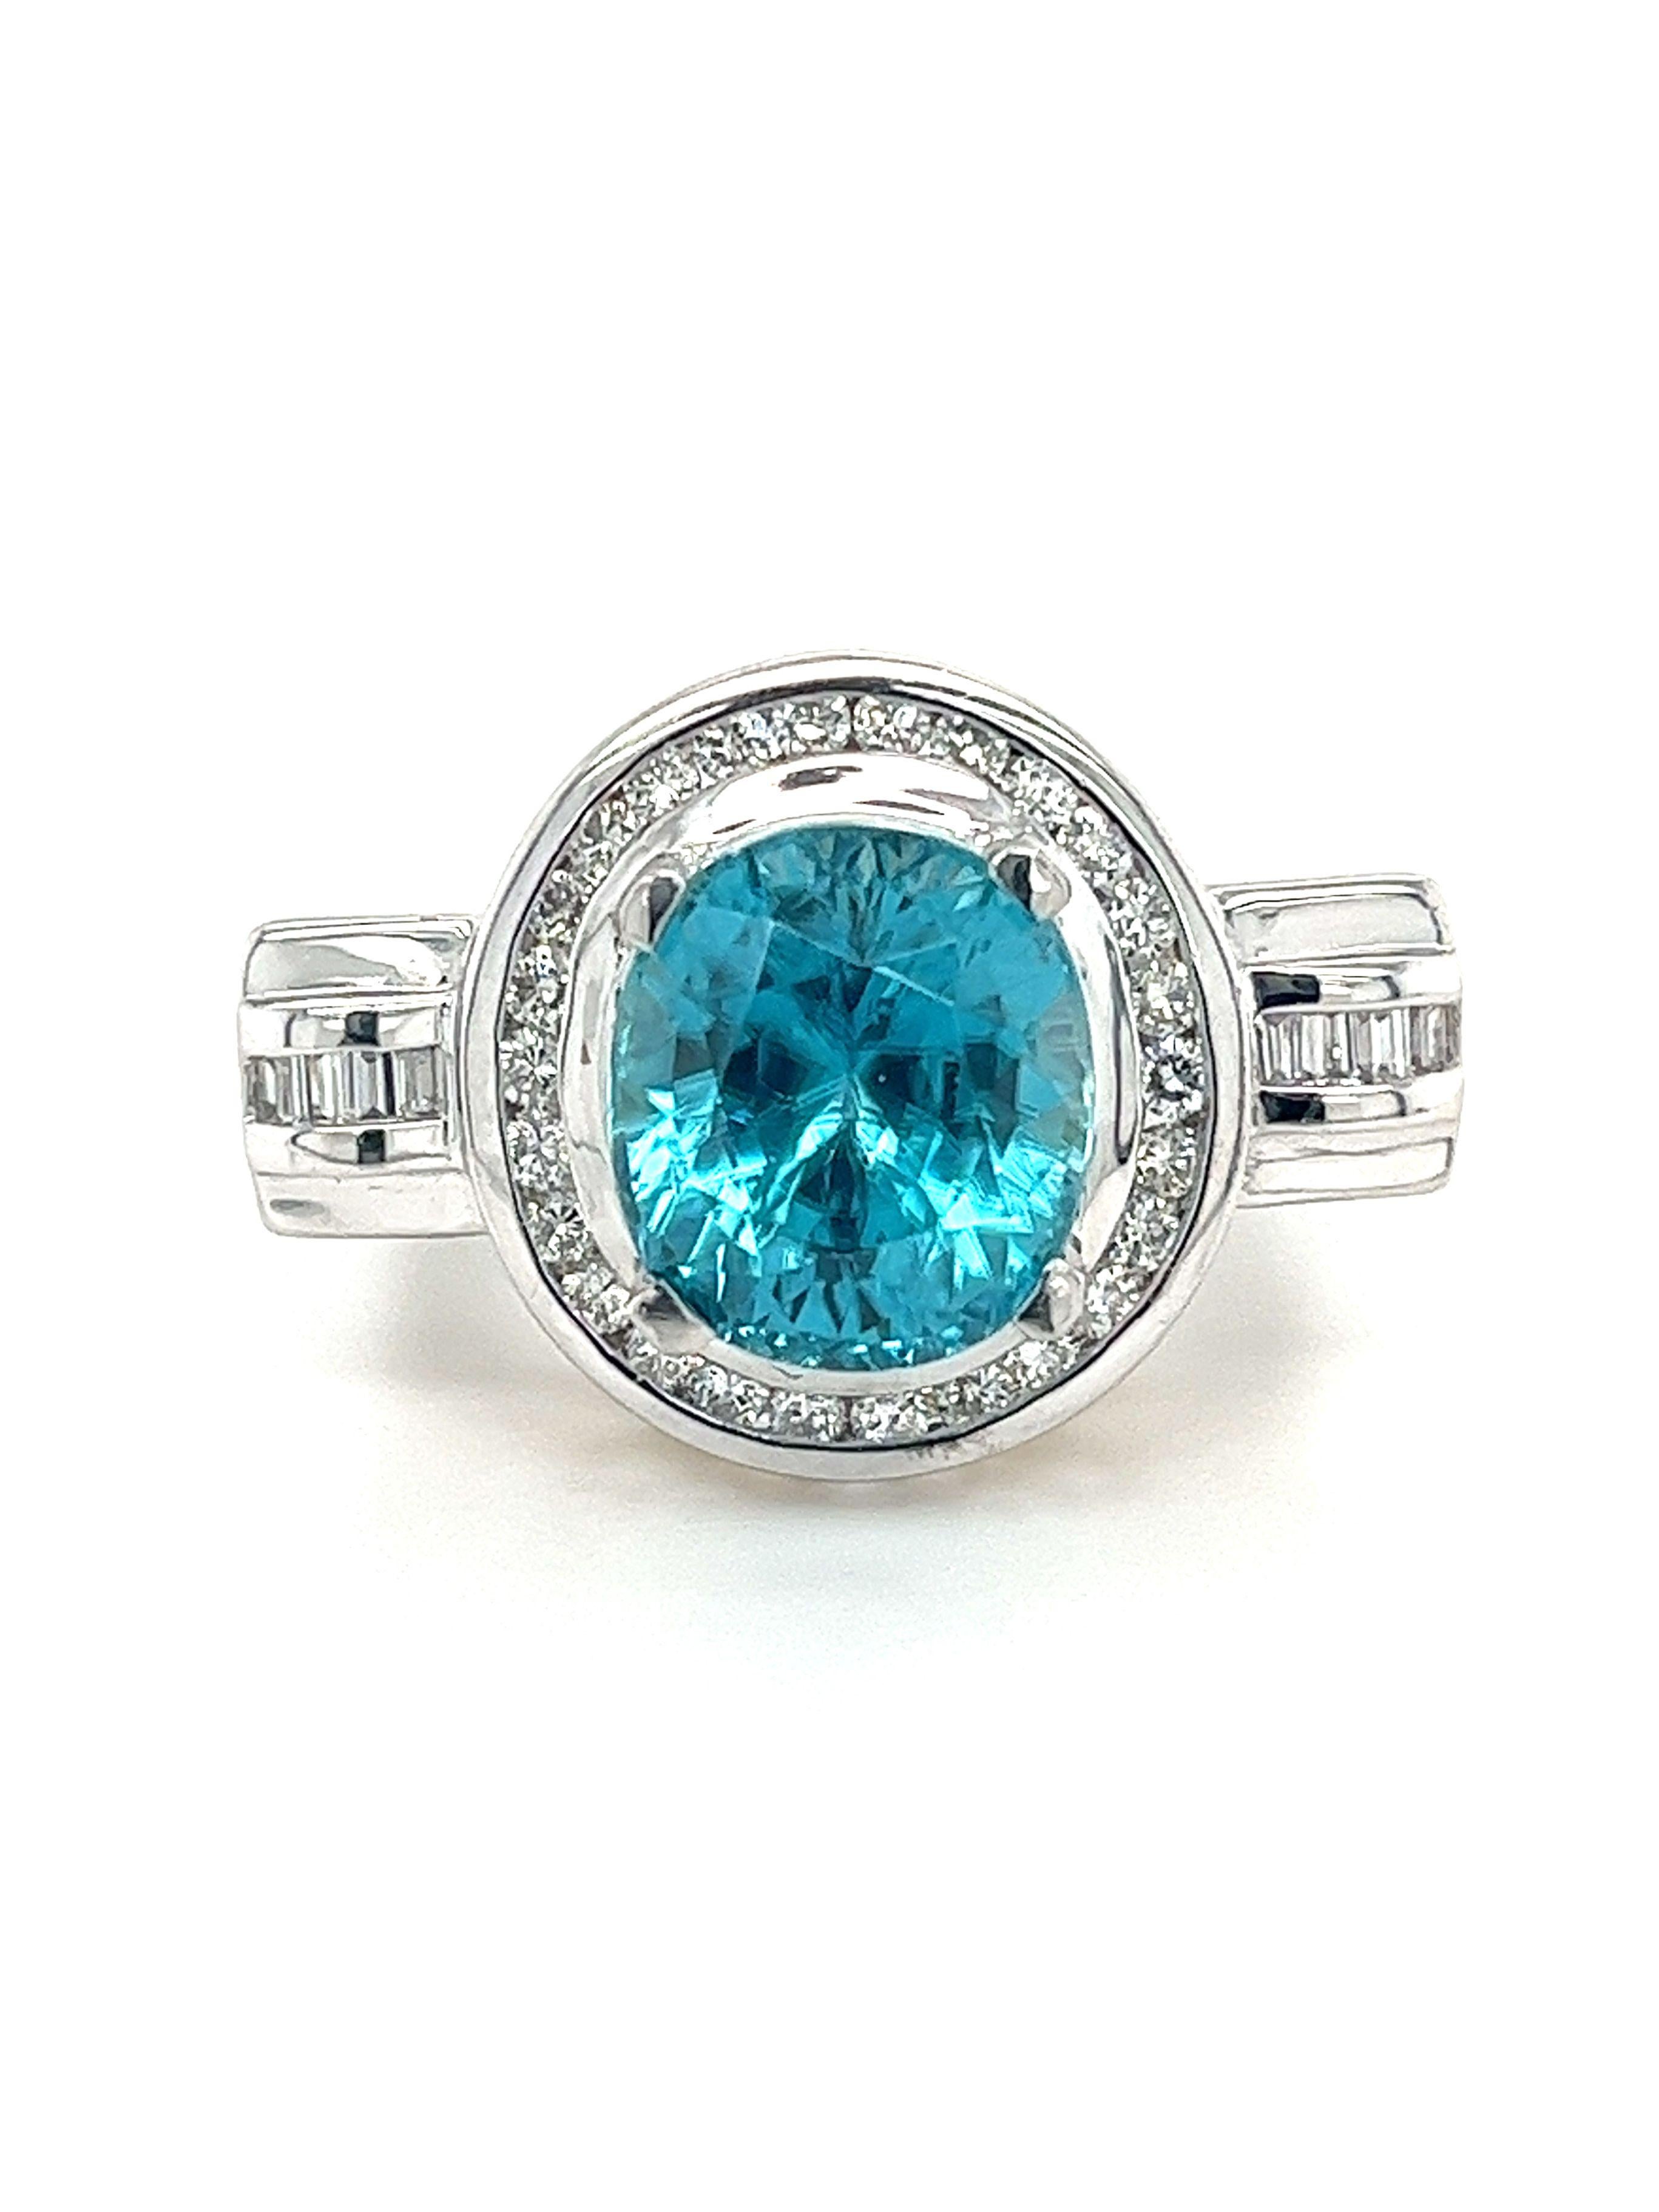 8 Carat Blue Zircon with Diamond Halo in Platinum & 18K Gold Filigree Ring  For Sale 1